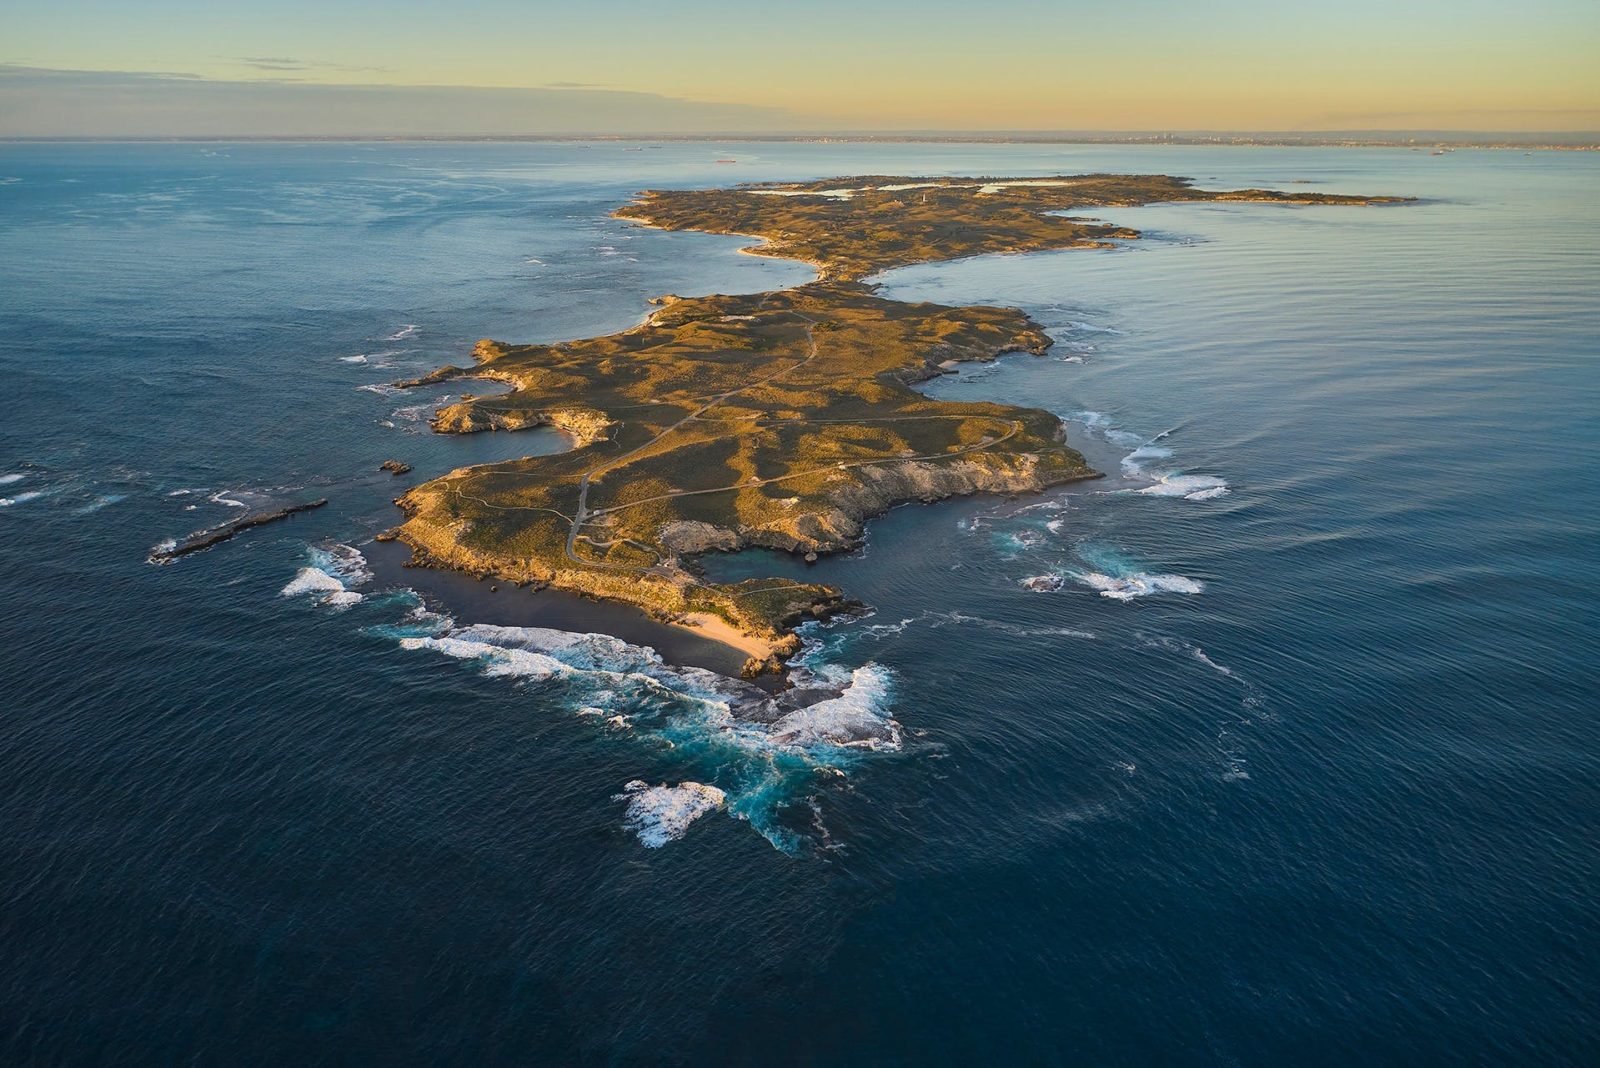 West End, Rottnest Island, Western Australia